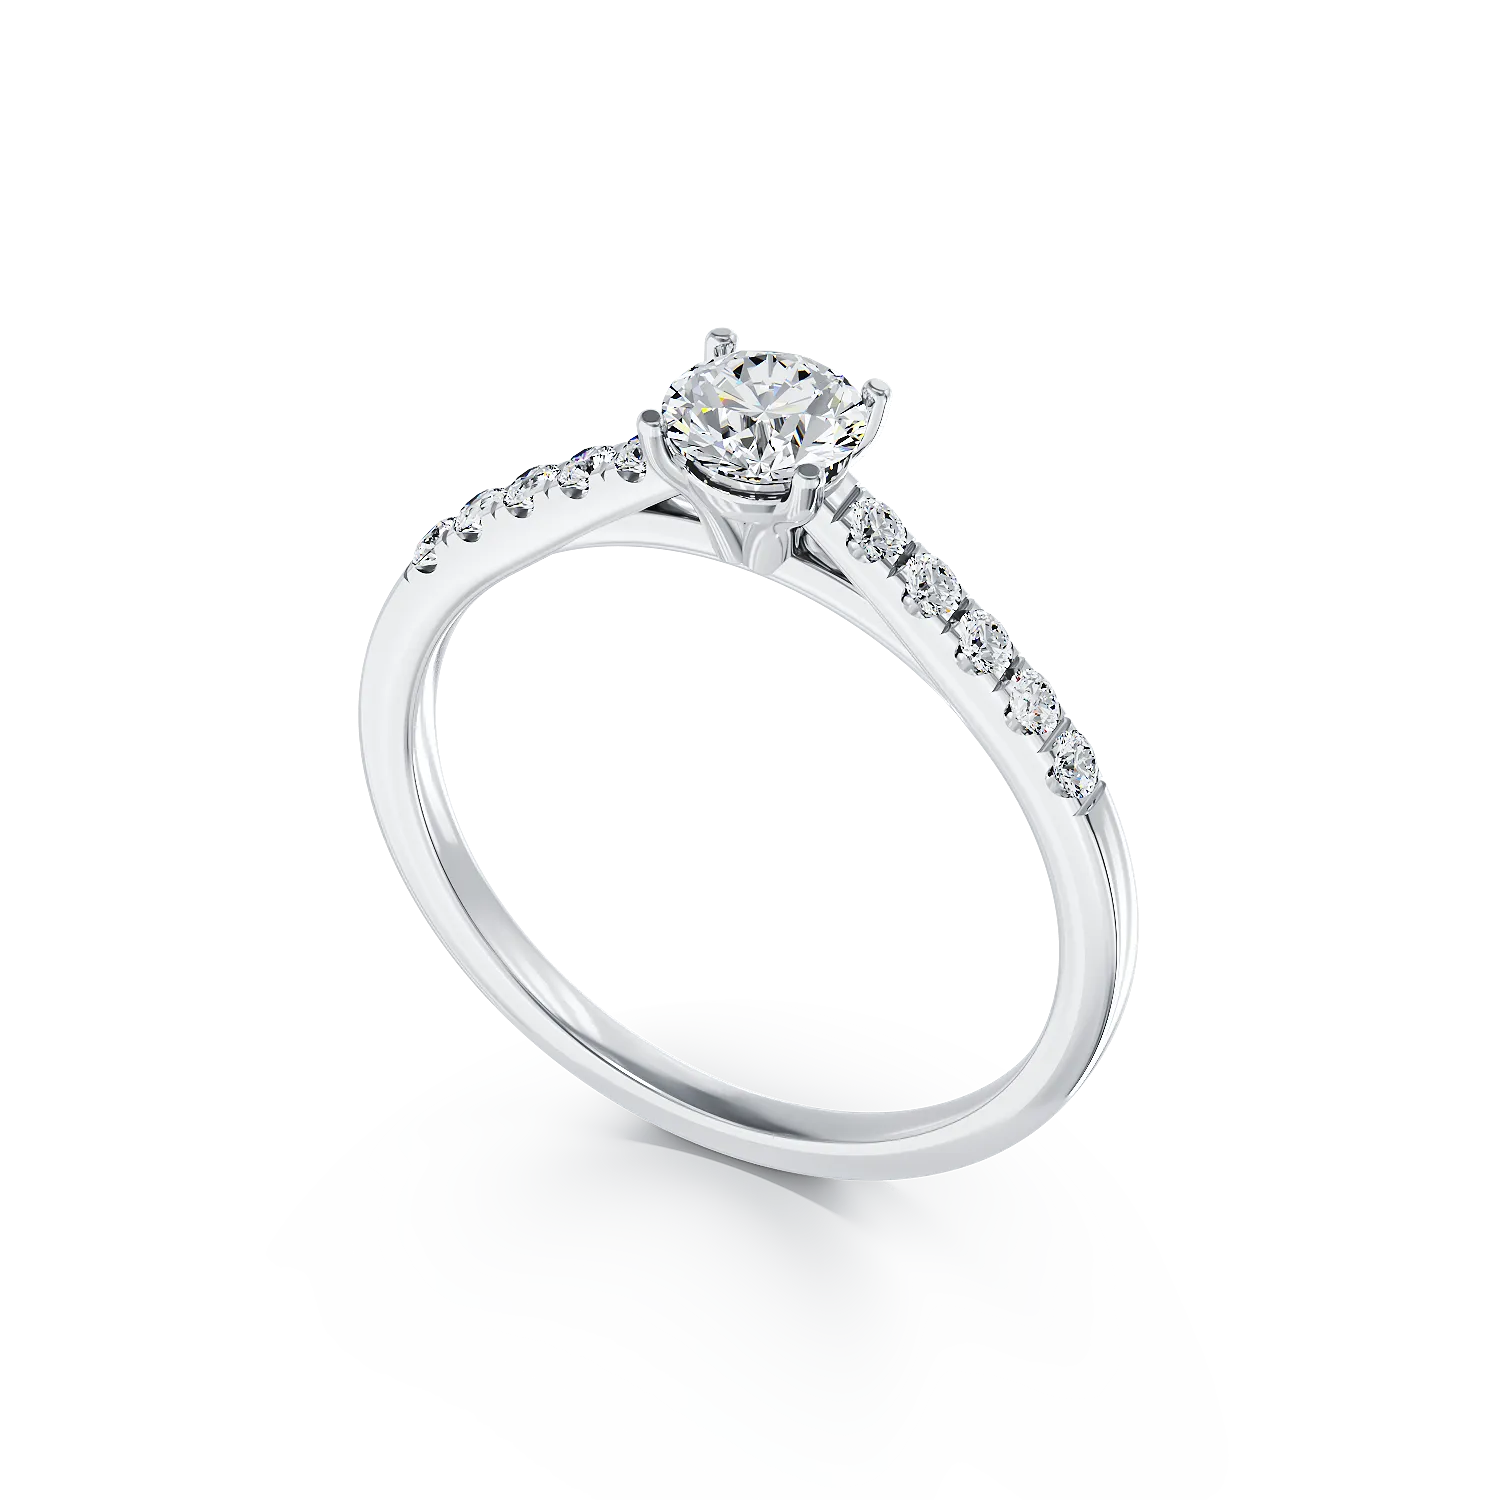 Inel de logodna din aur alb de 18K cu diamant de 0.4ct si diamante de 0.15ct